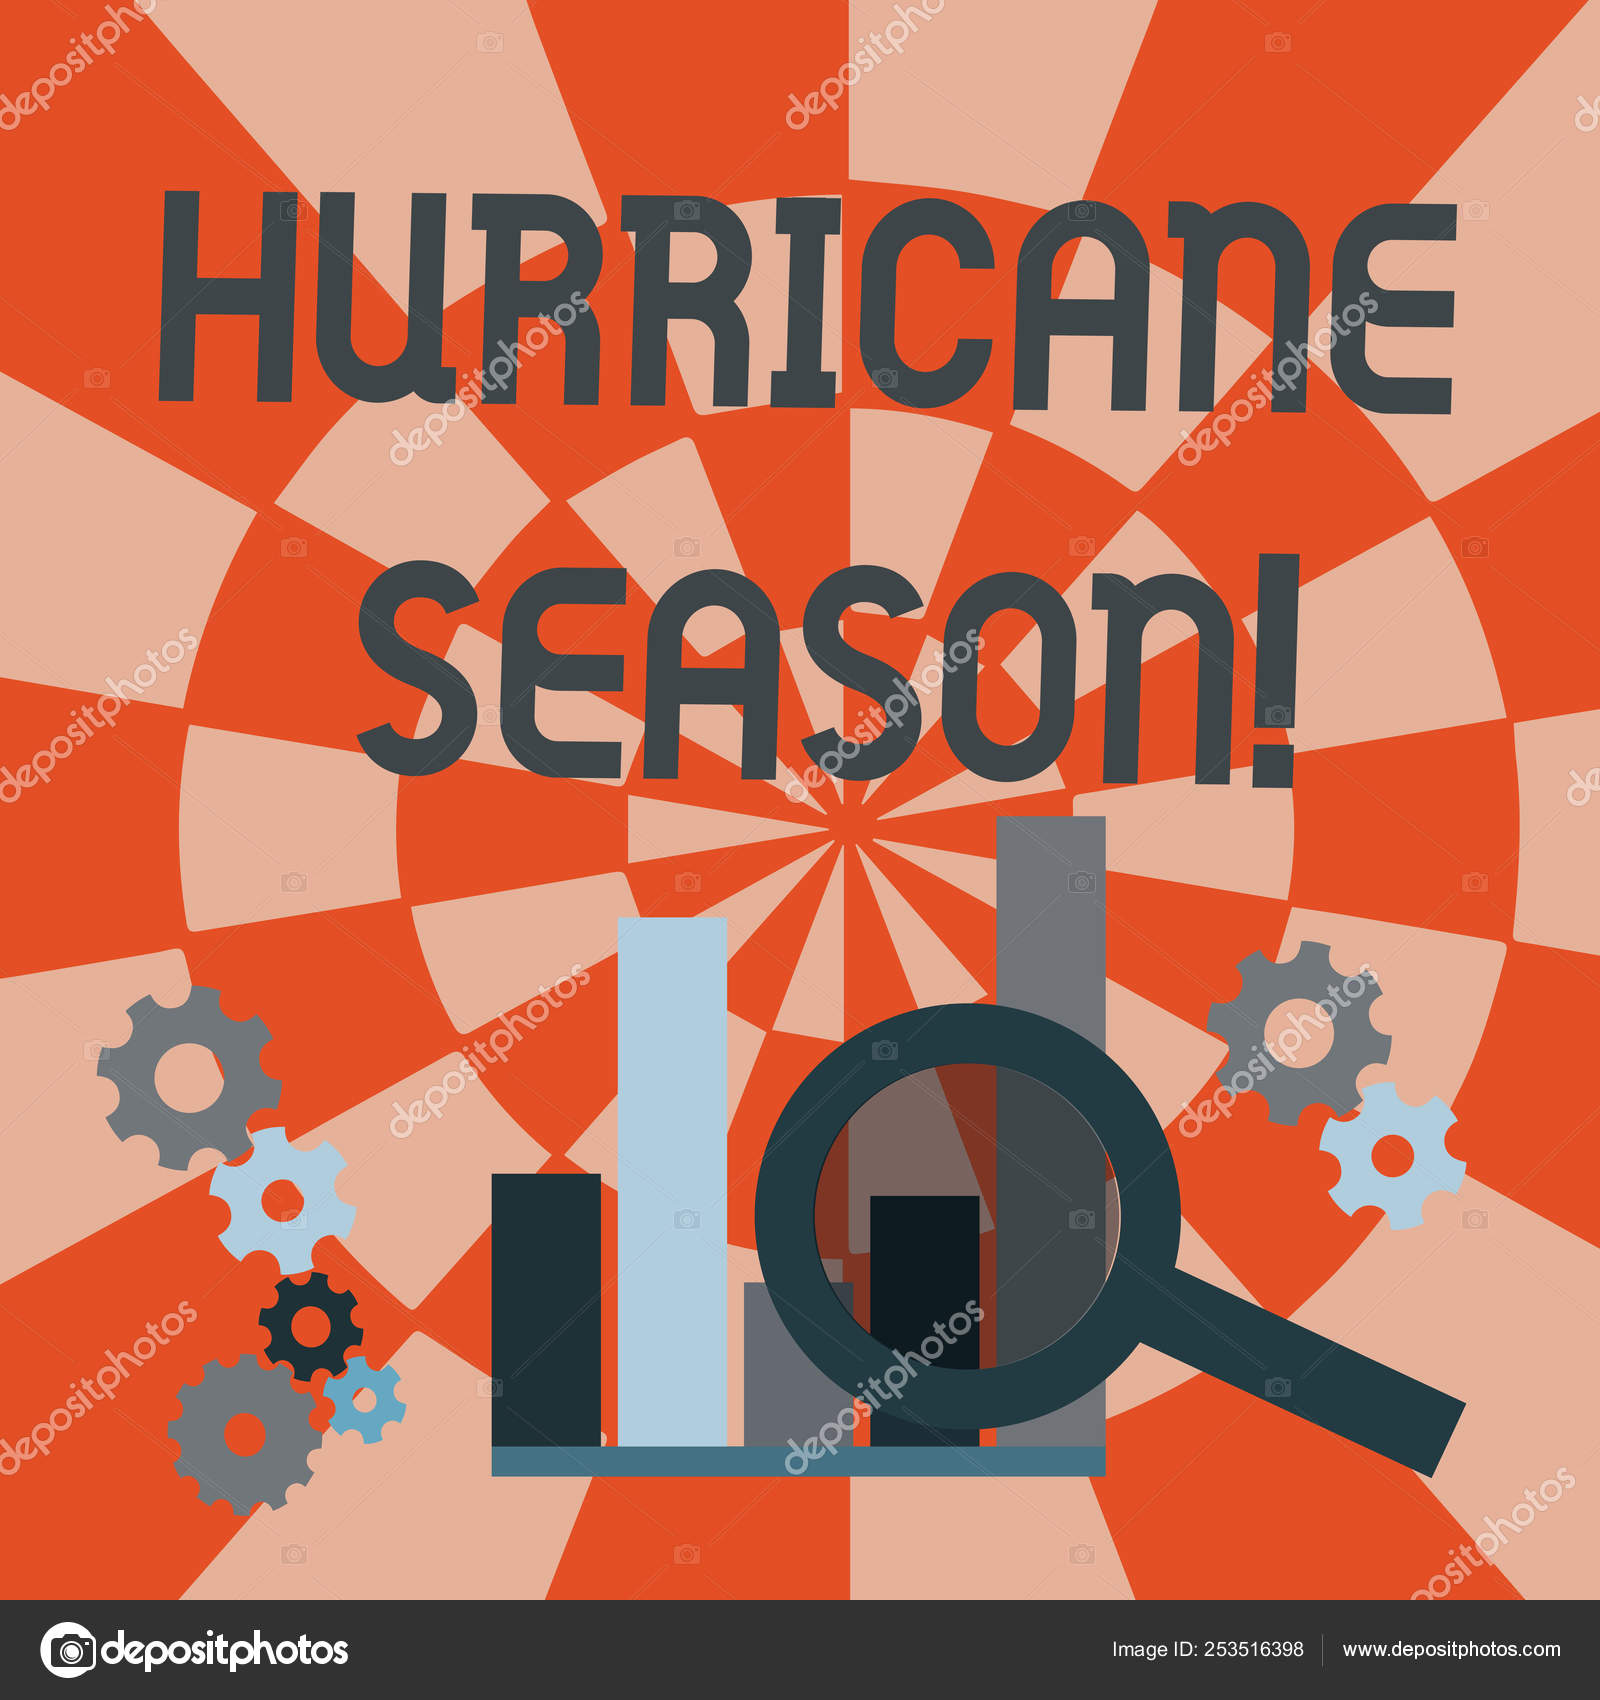 Hurricane Season Chart